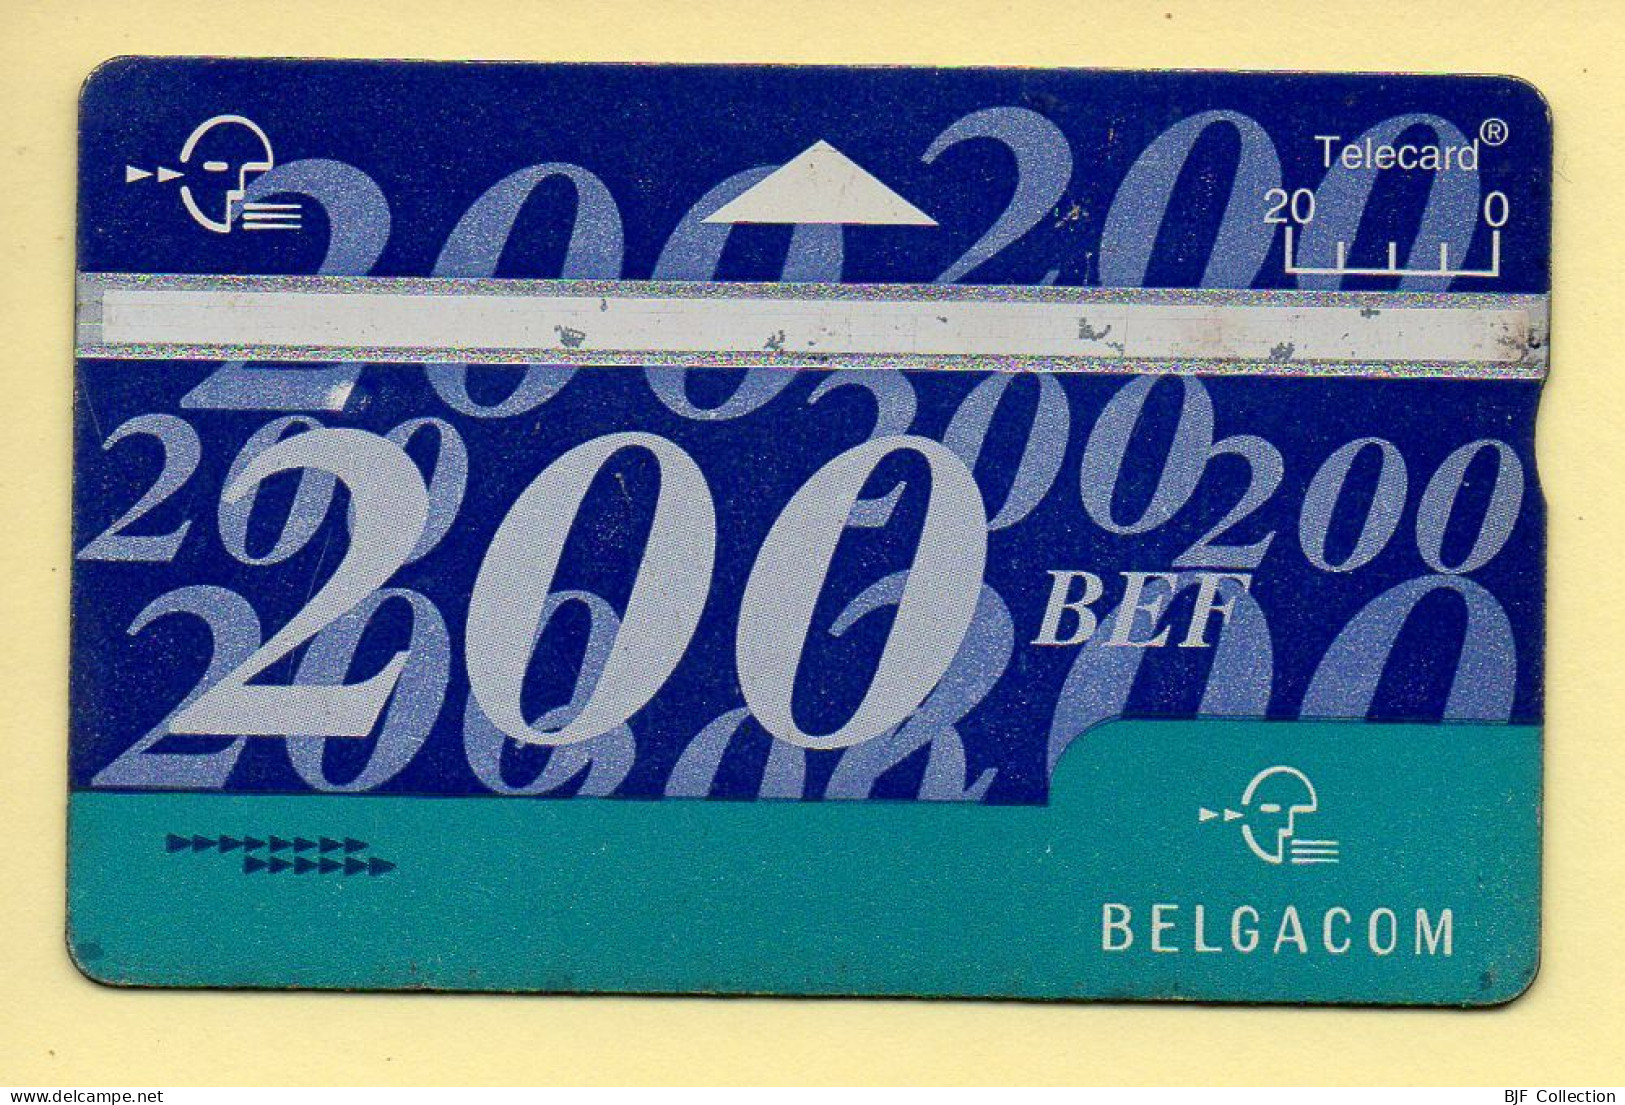 Télécarte : Belgique : BELGACOM / 200 BEF - Ohne Chip